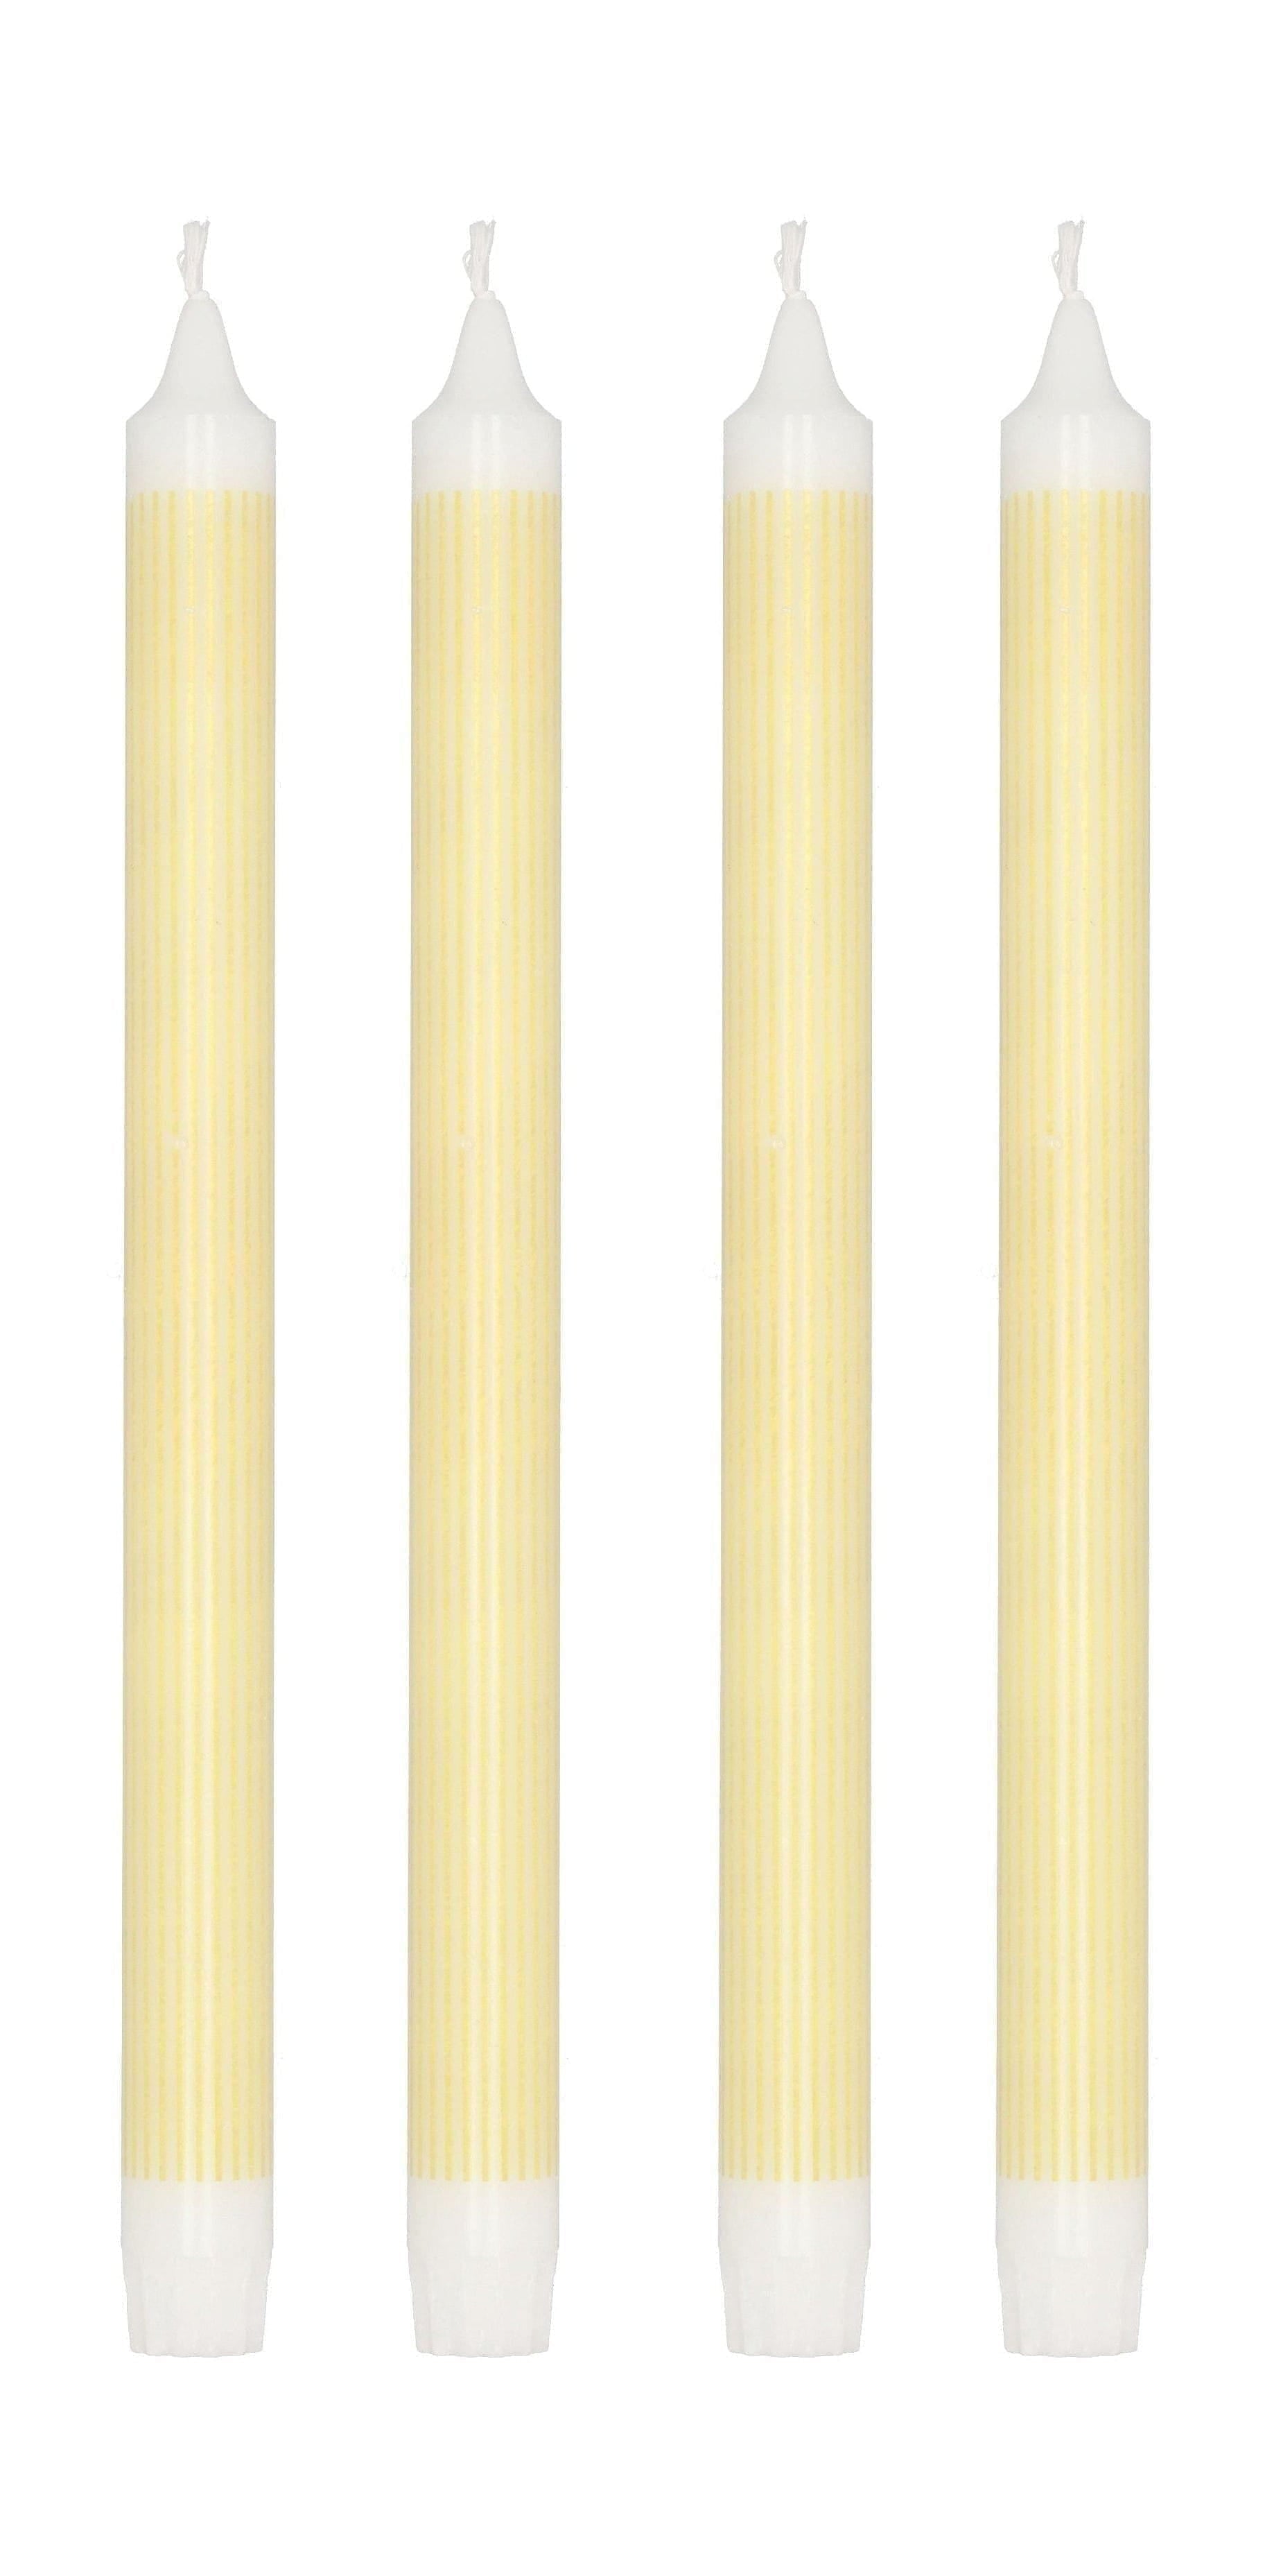 Villa Collection Styles Stick Candele Set di 4 Øx H 2.2x29, giallo